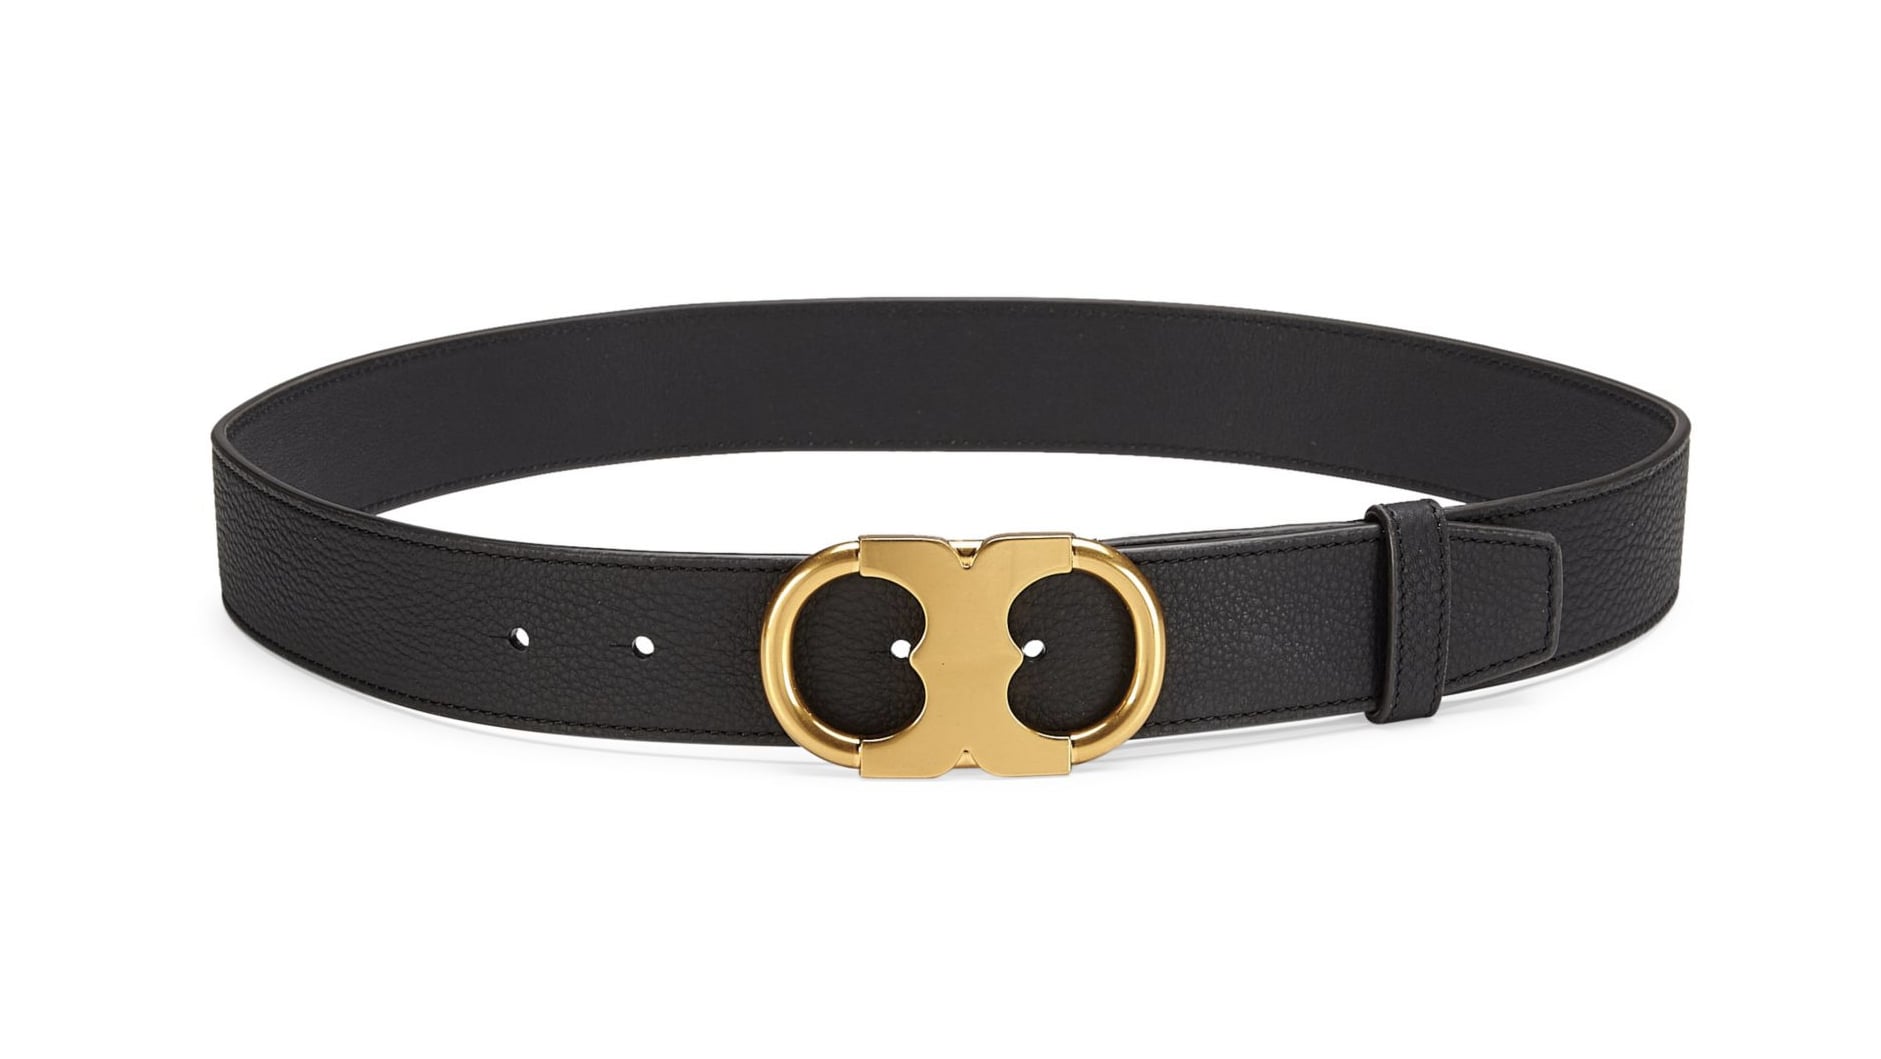 Affordable Belts Like the Gucci Double G Belt | POPSUGAR Fashion